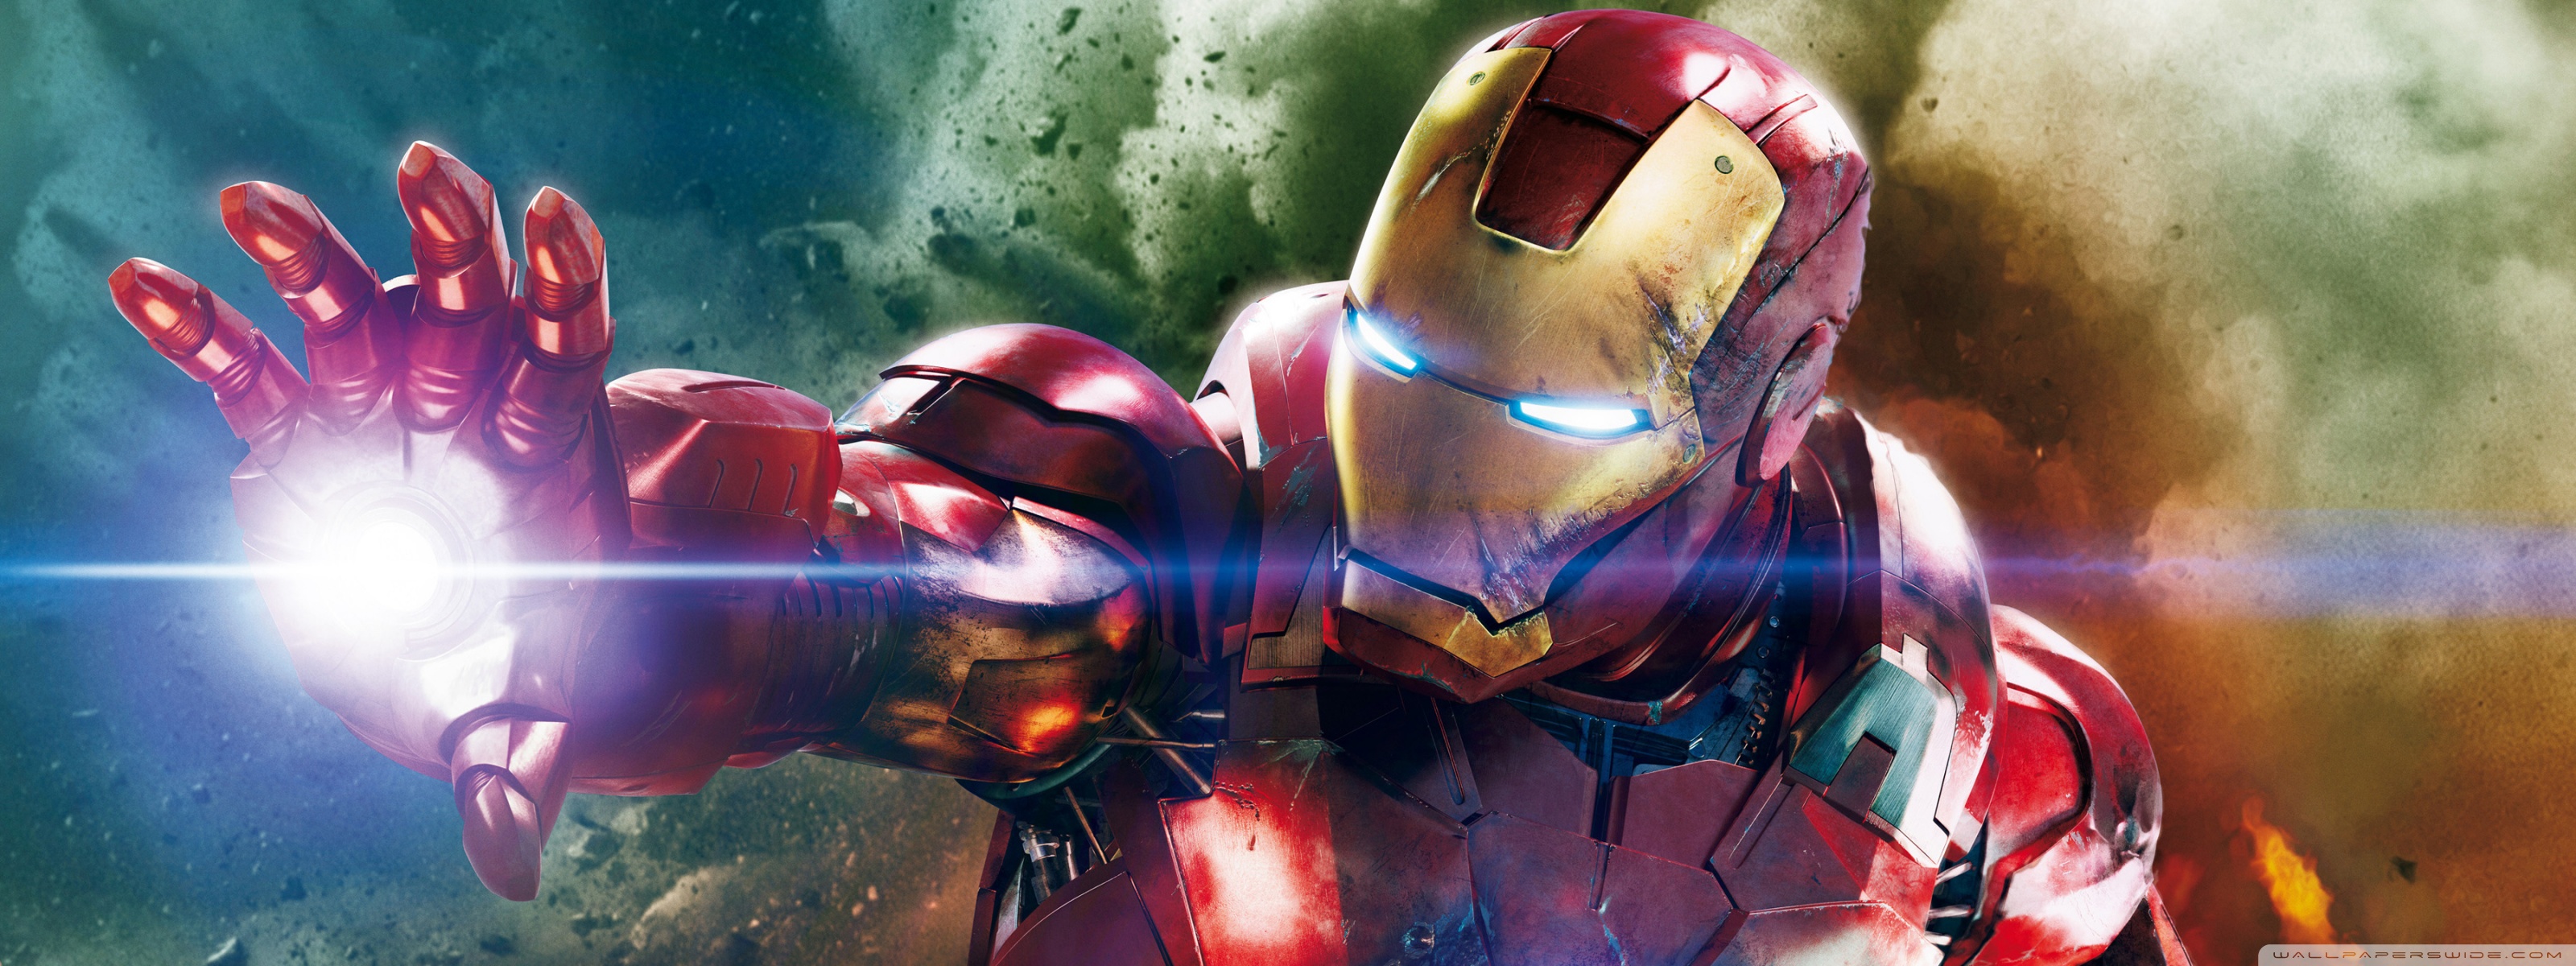 The Avengers Iron Man ❤ 4K HD Desktop Wallpaper for 4K Ultra HD TV